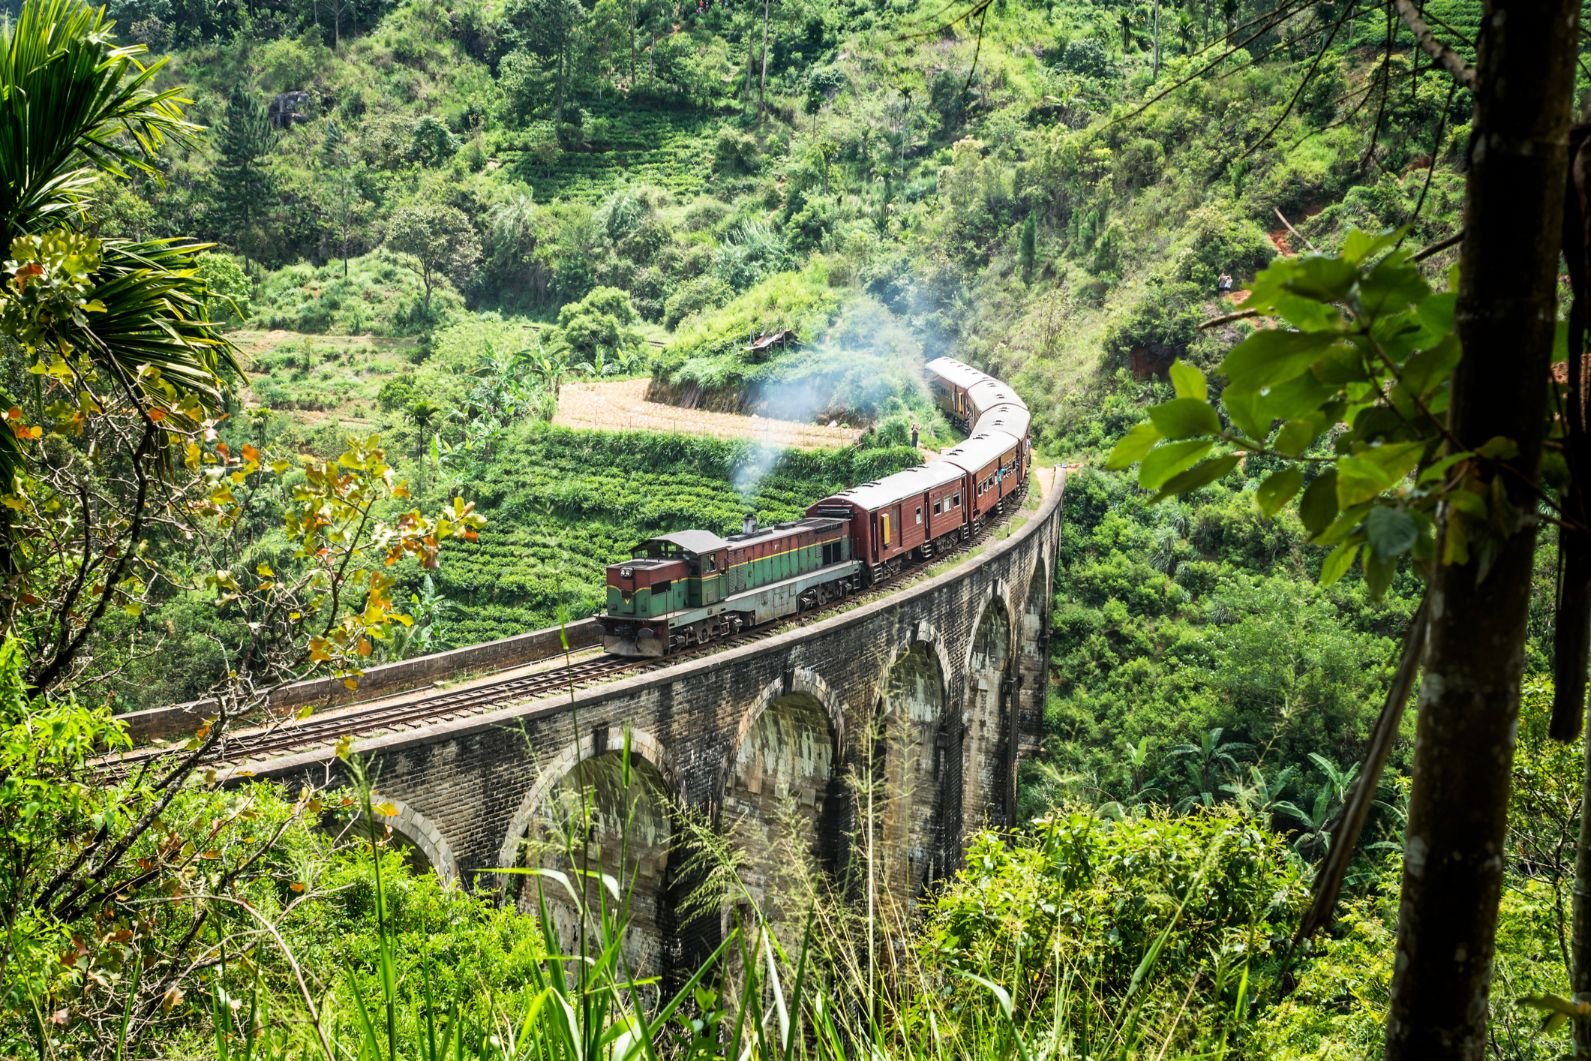 A steam train rolls around a viaduct amongst the lush greenery of Sri Lanka.